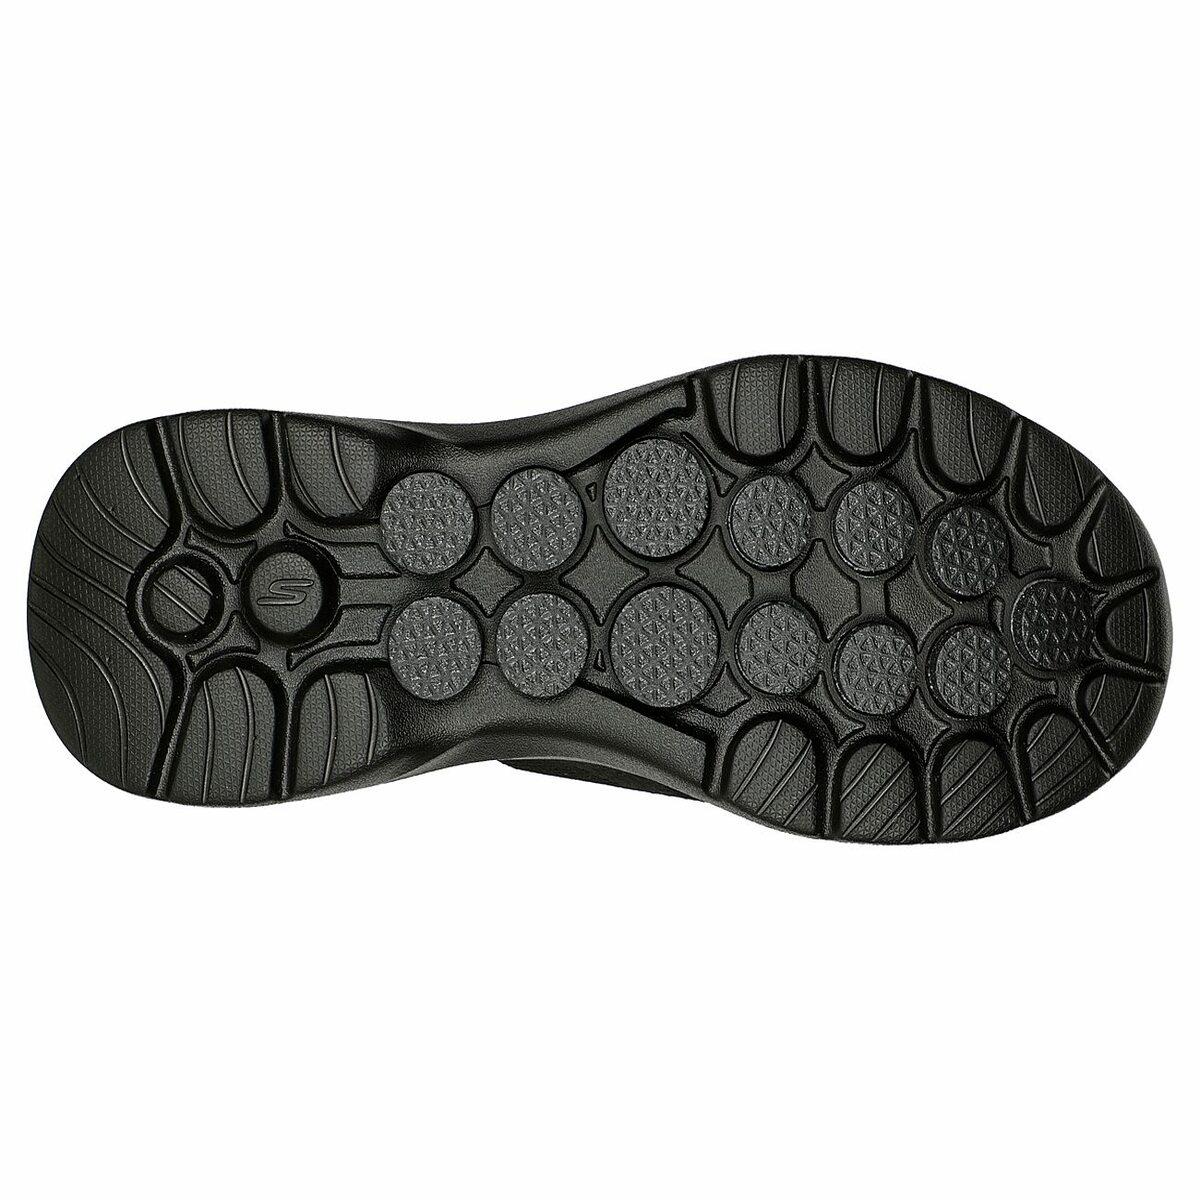 Buy Skechers Men Black Sports Walking Shoes Online | SKU: 158-216278-11 ...